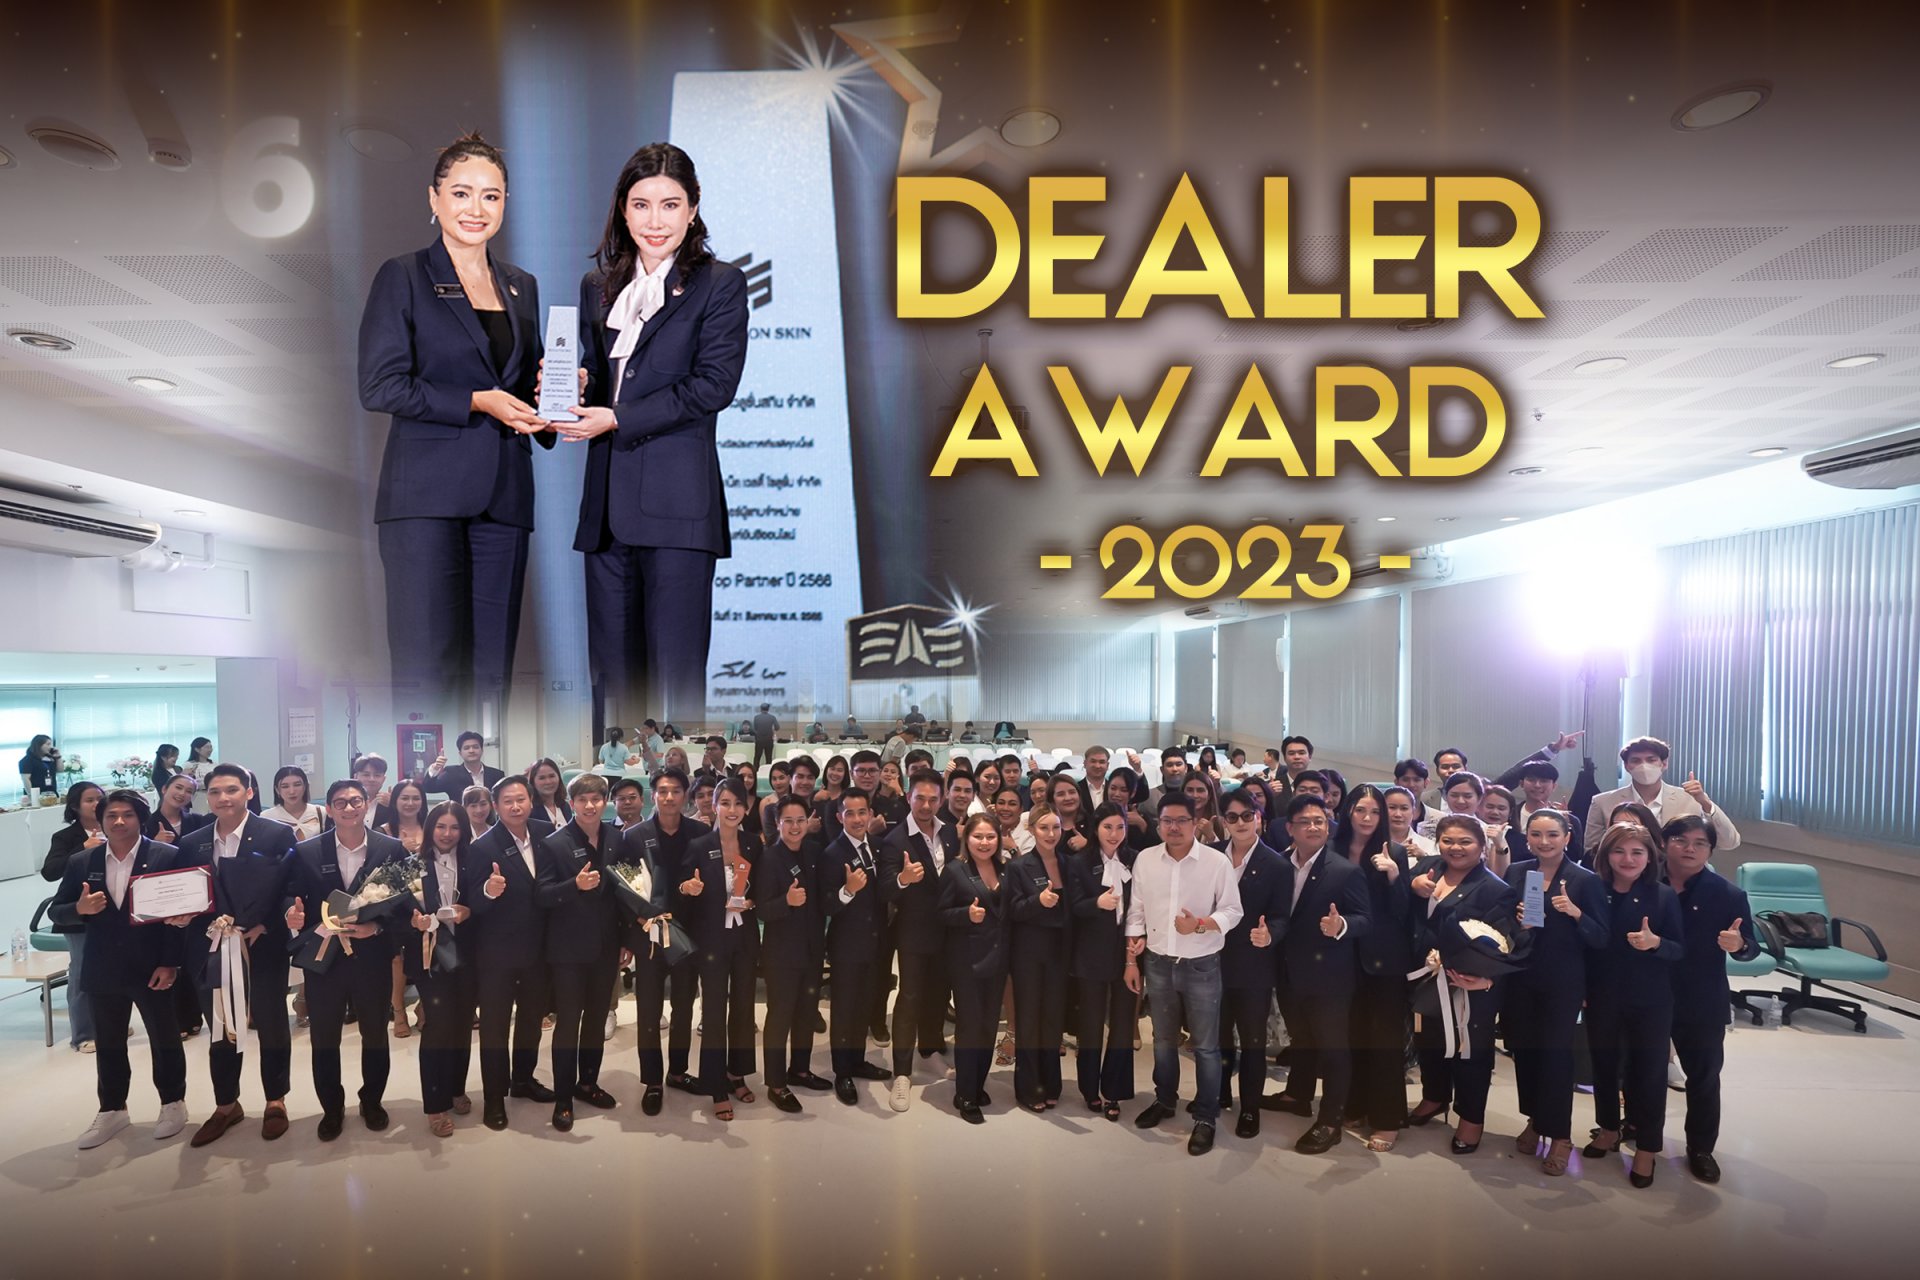 Dealer Award 2023